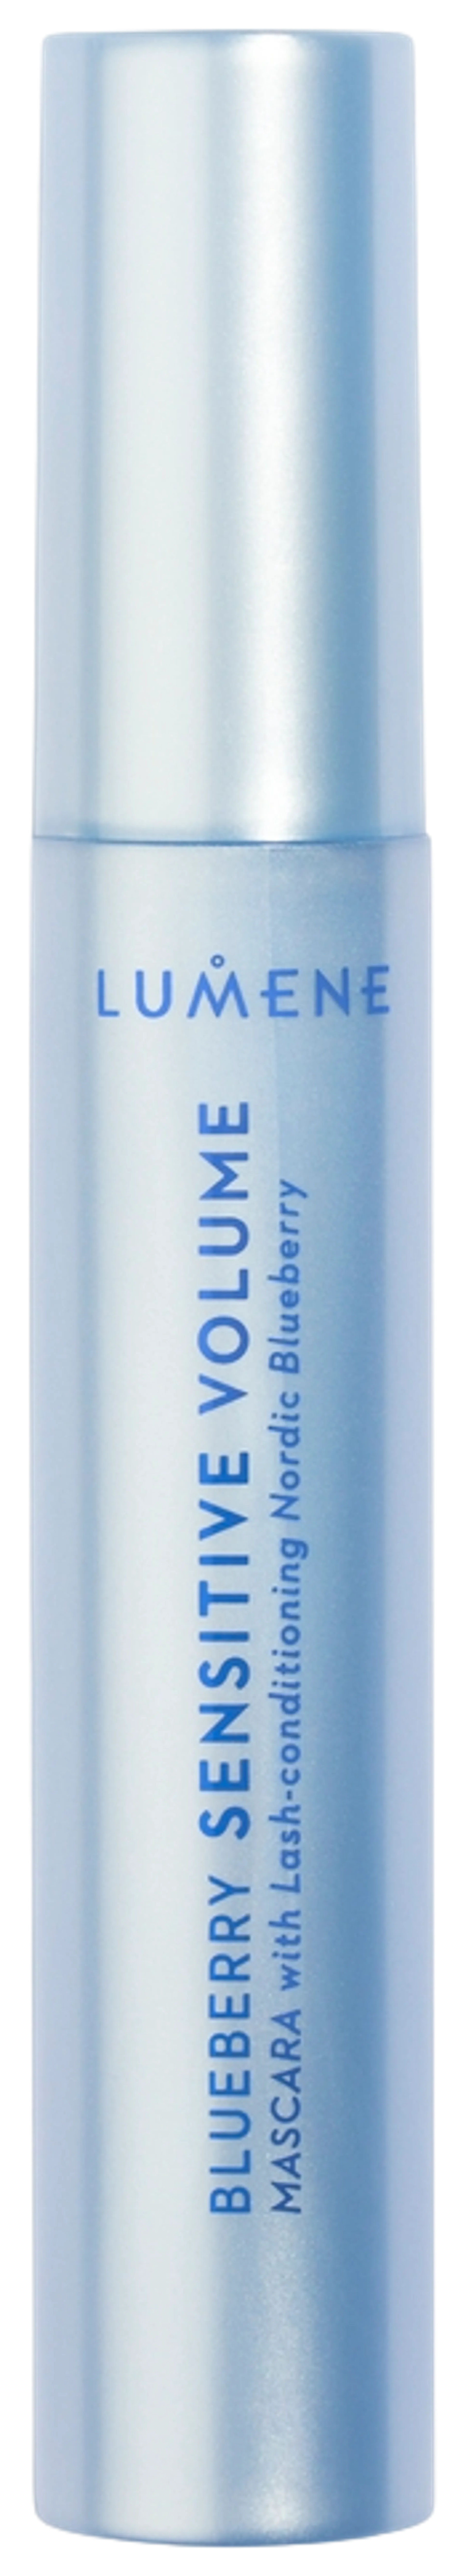 Lumene Blueberry Sensitive Volume Mascara 14ml - 1